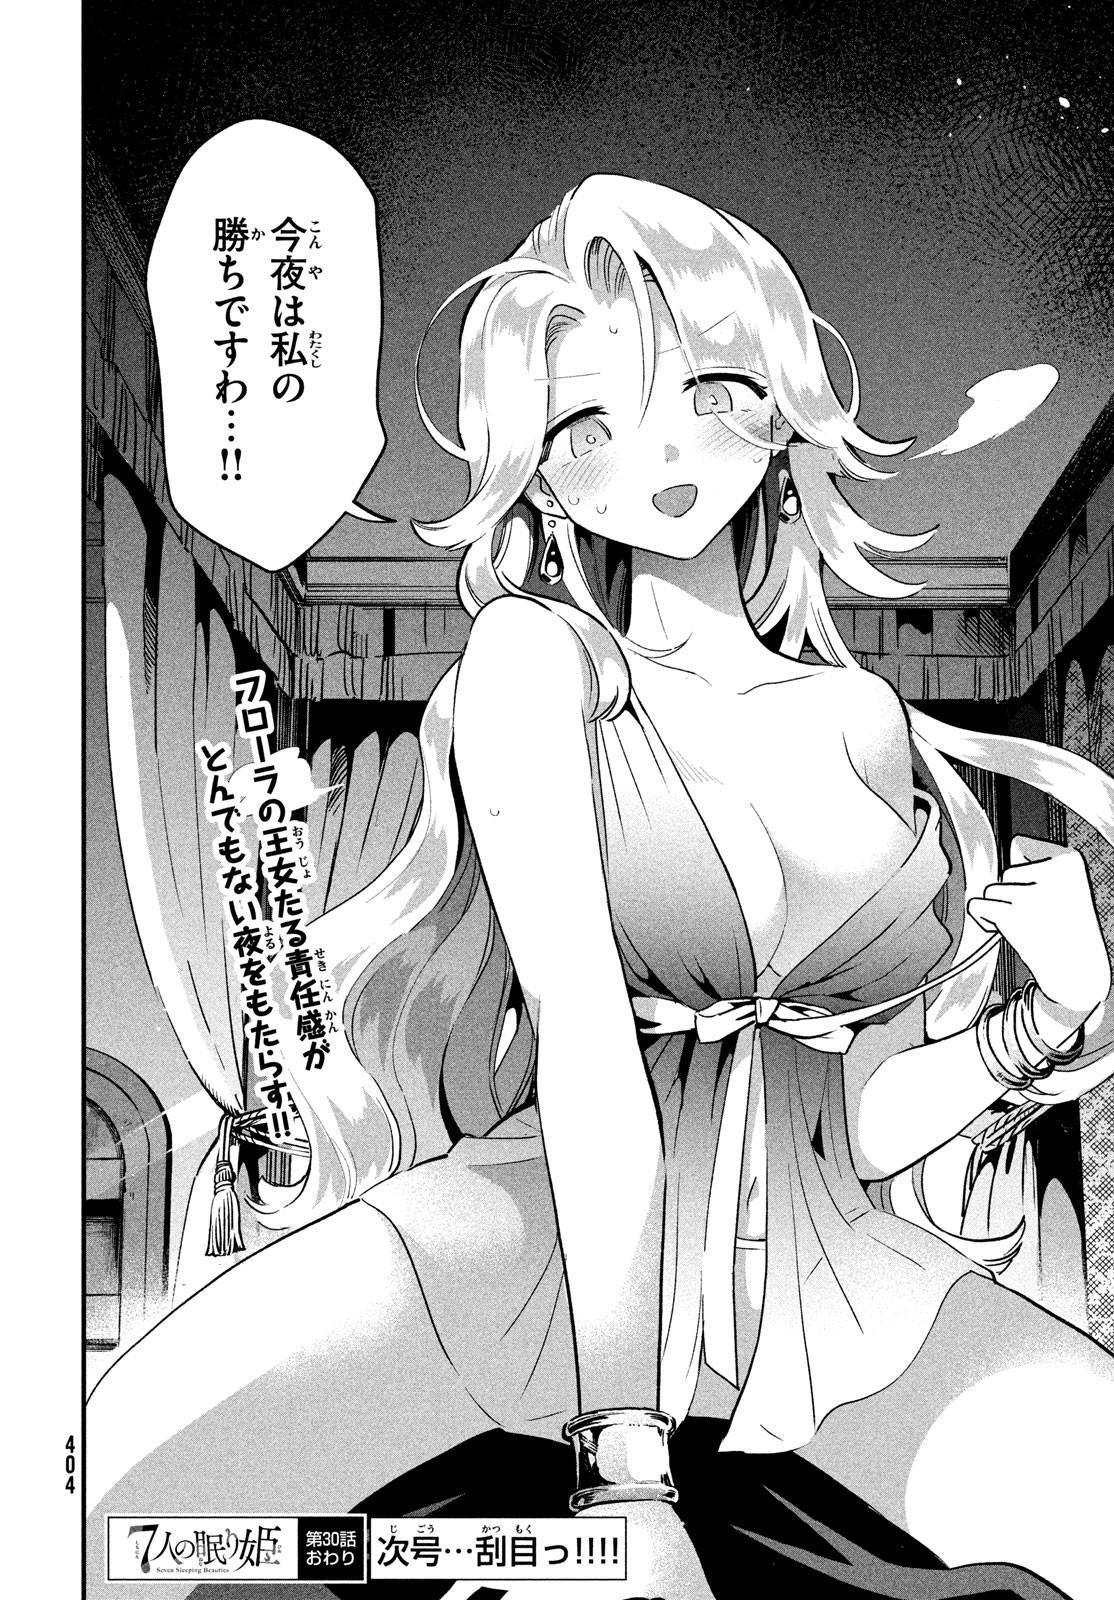 7-nin no Nemuri Hime - Chapter 30 - Page 14